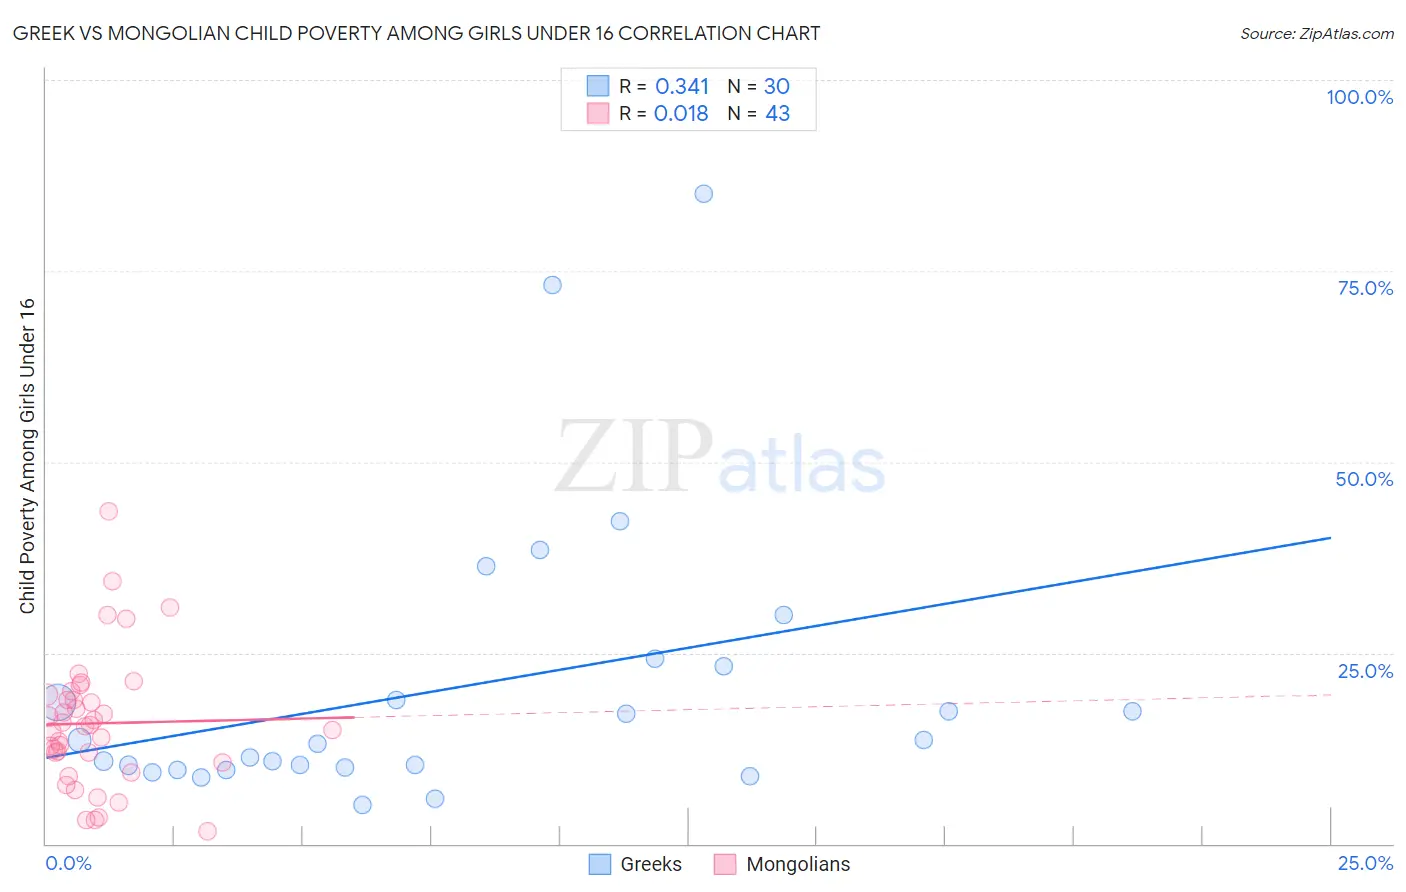 Greek vs Mongolian Child Poverty Among Girls Under 16